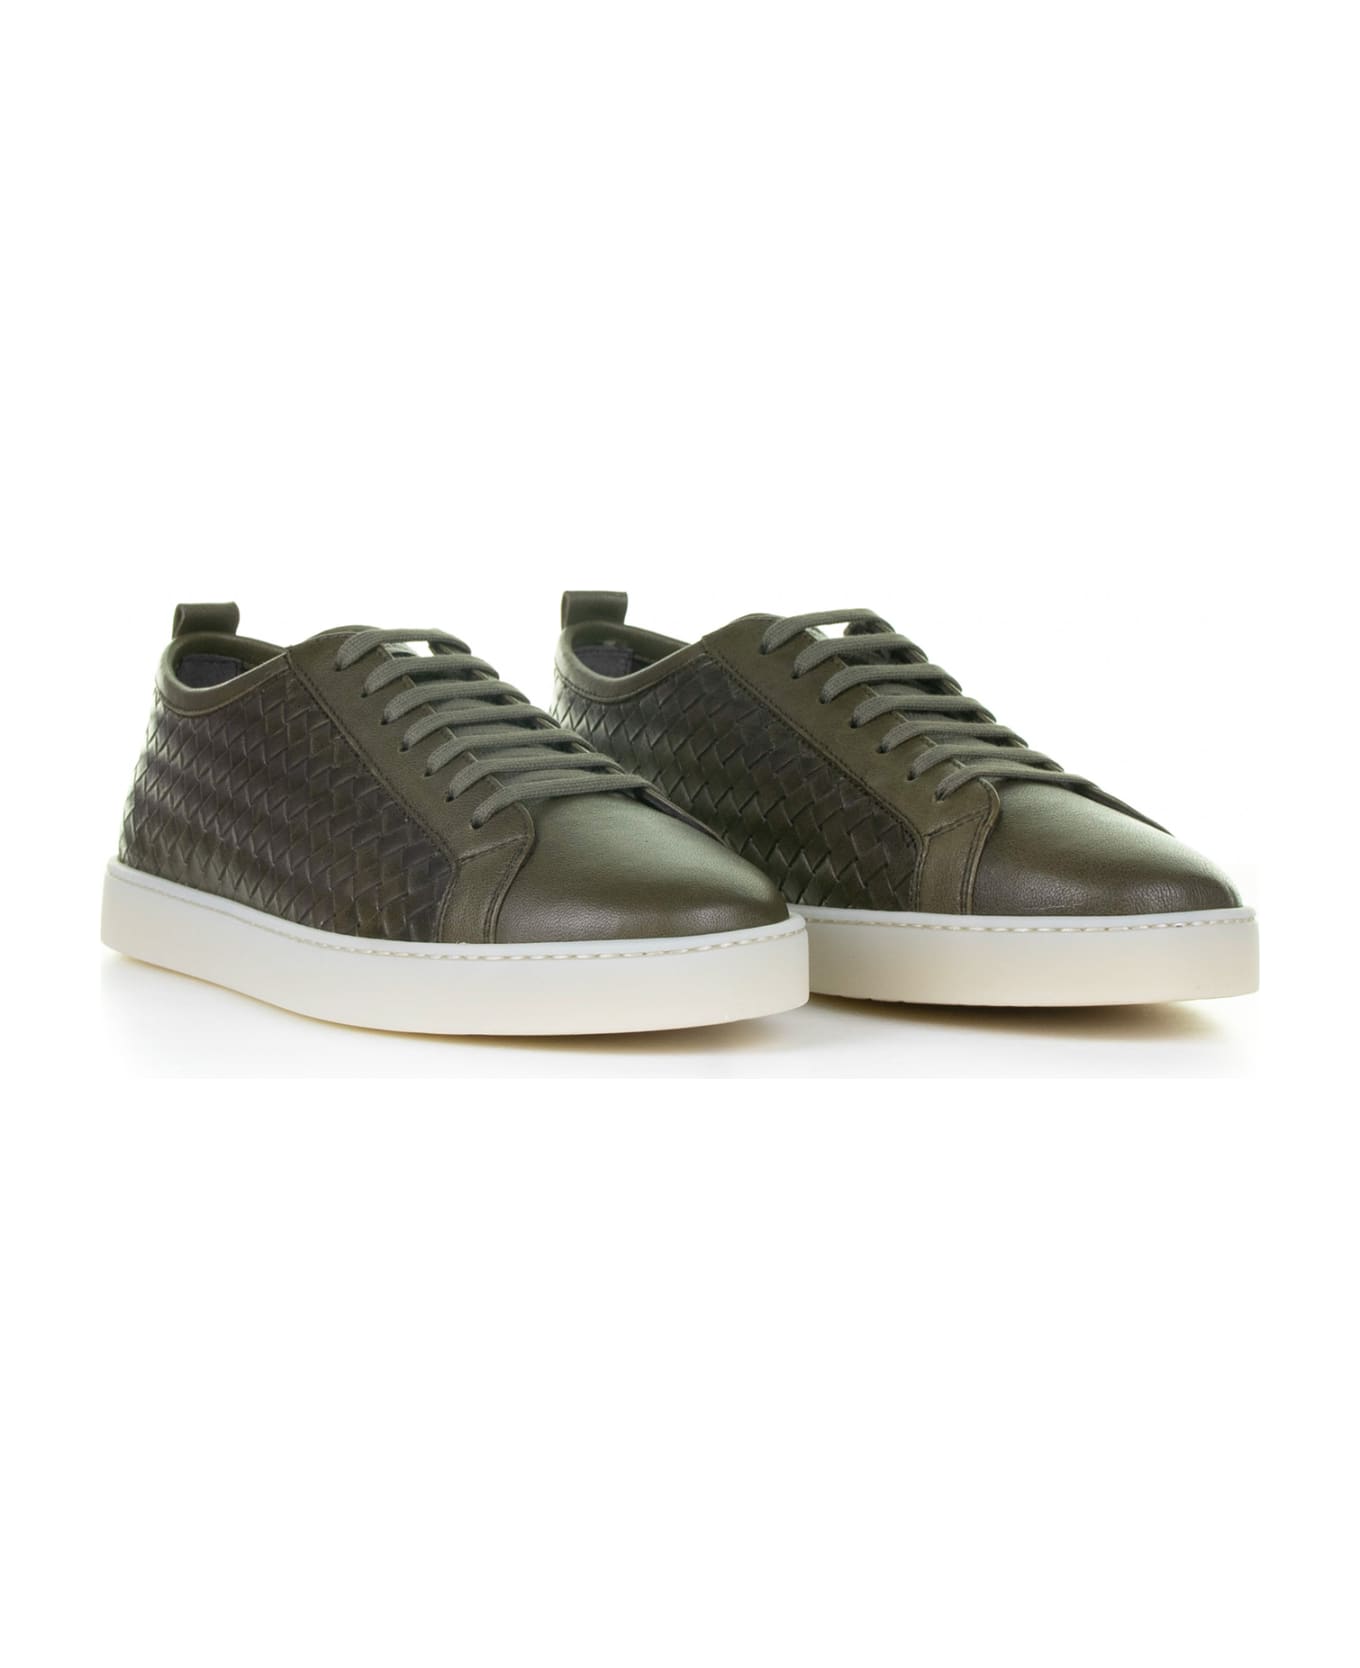 Barrett Green Woven Leather Sneaker - VERDE